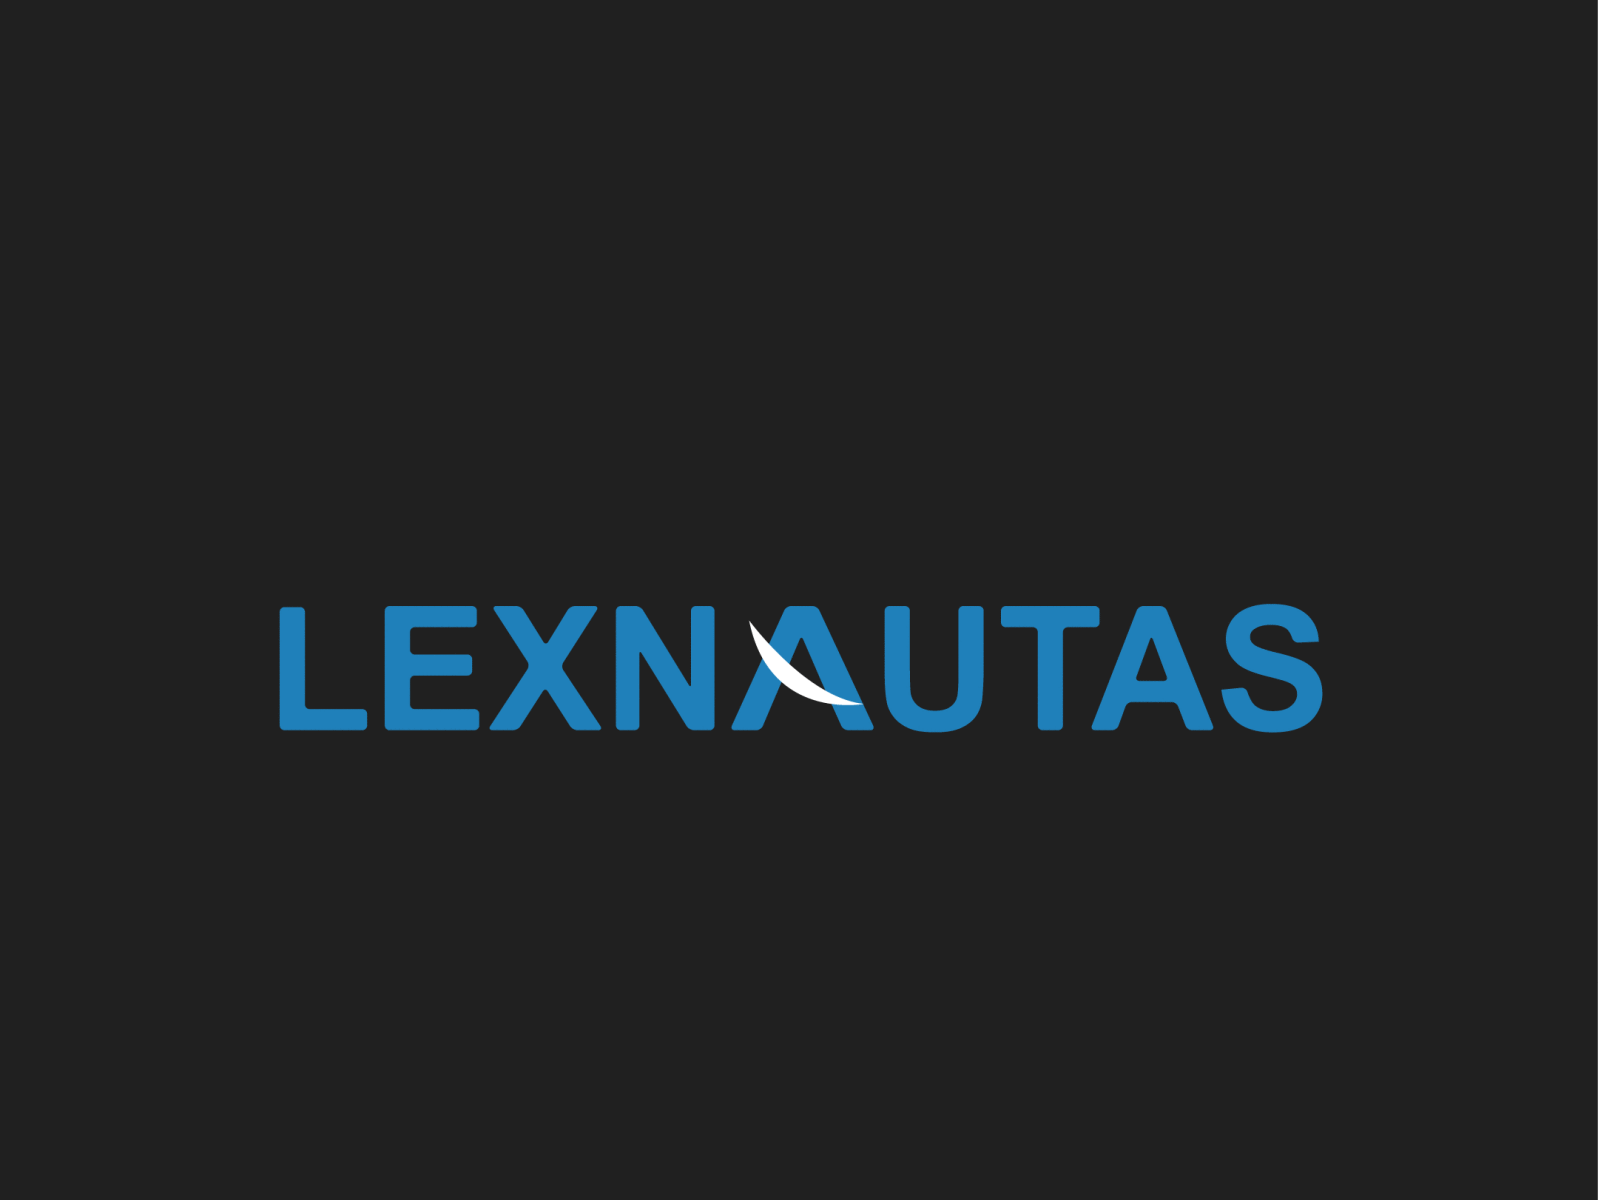 Lexnautas design logo